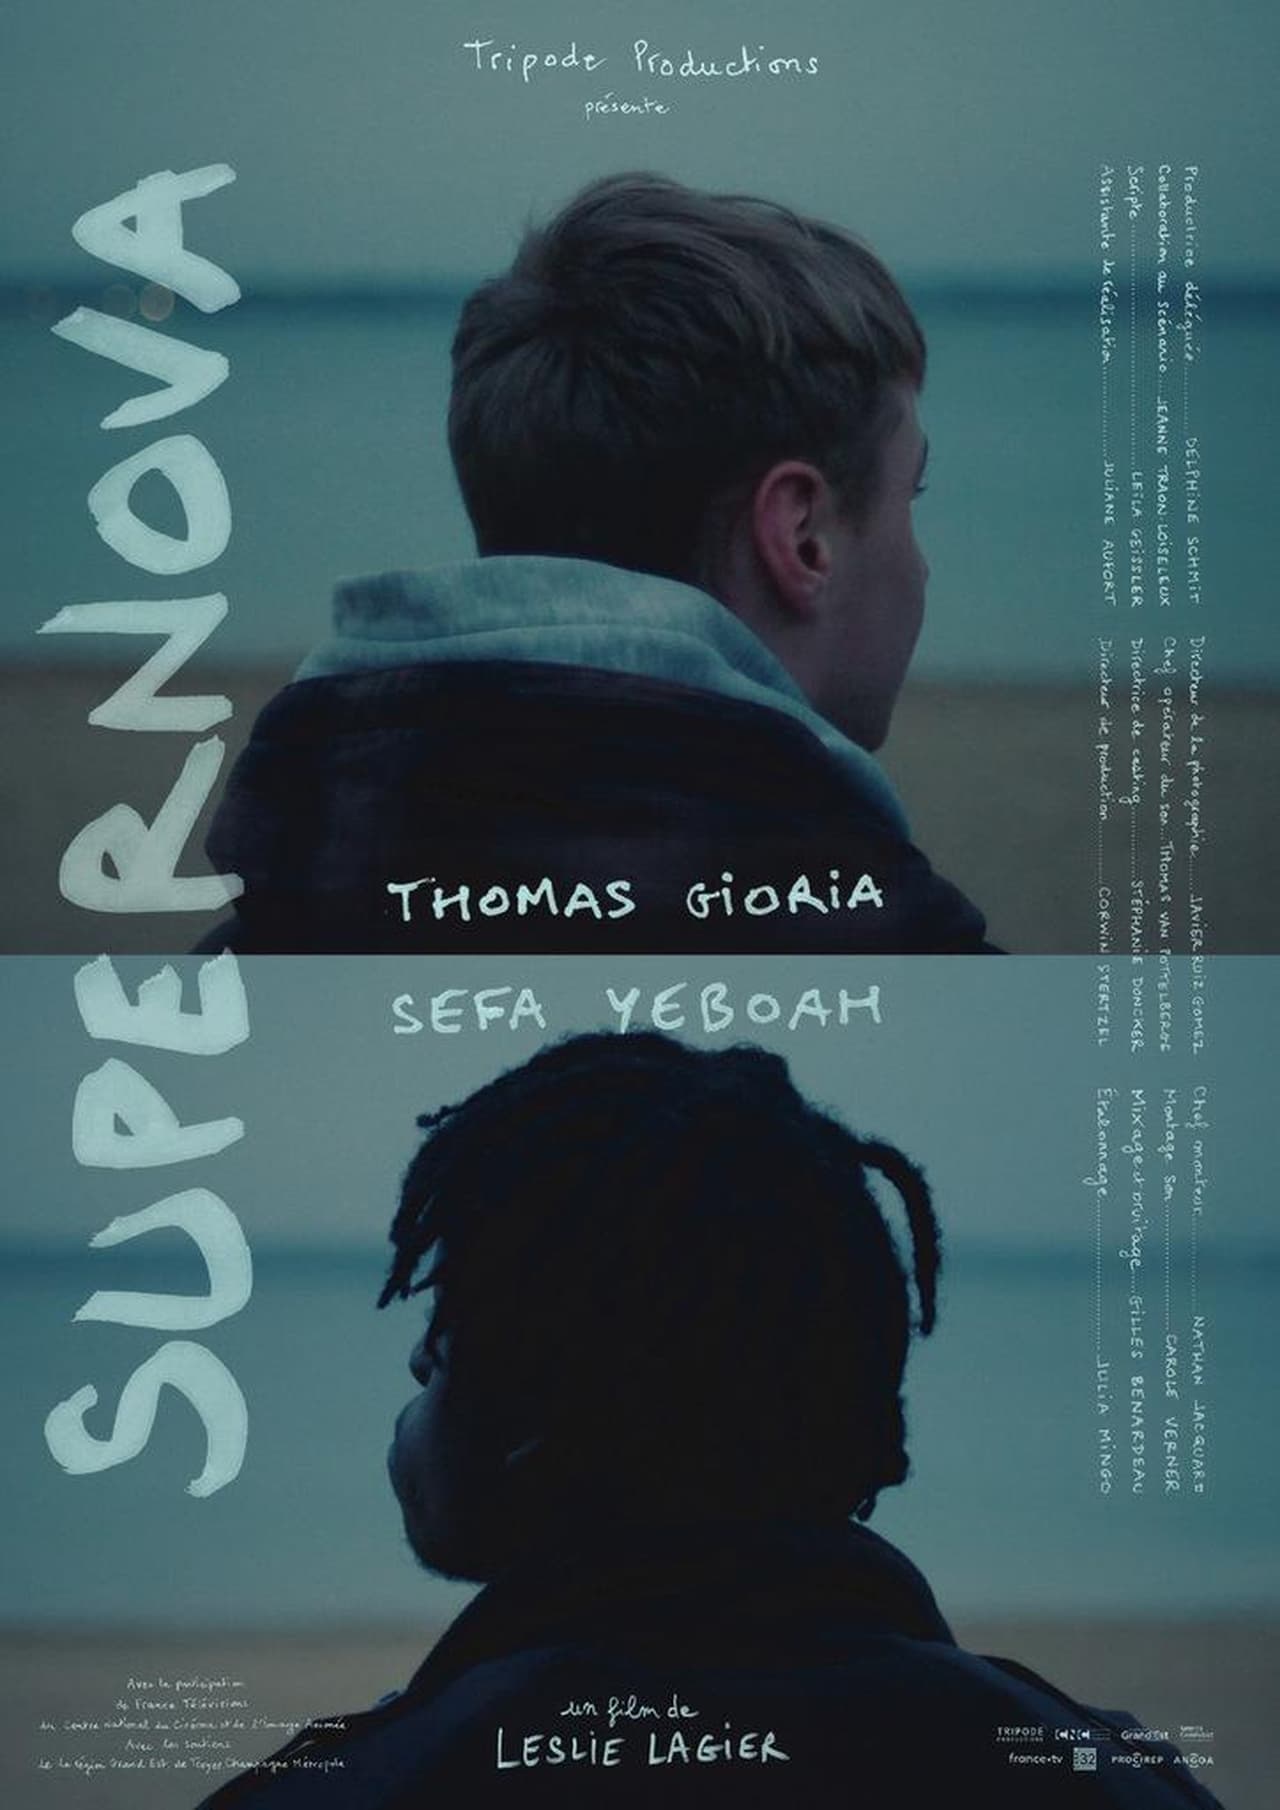 Plakát pro film “Supernova”